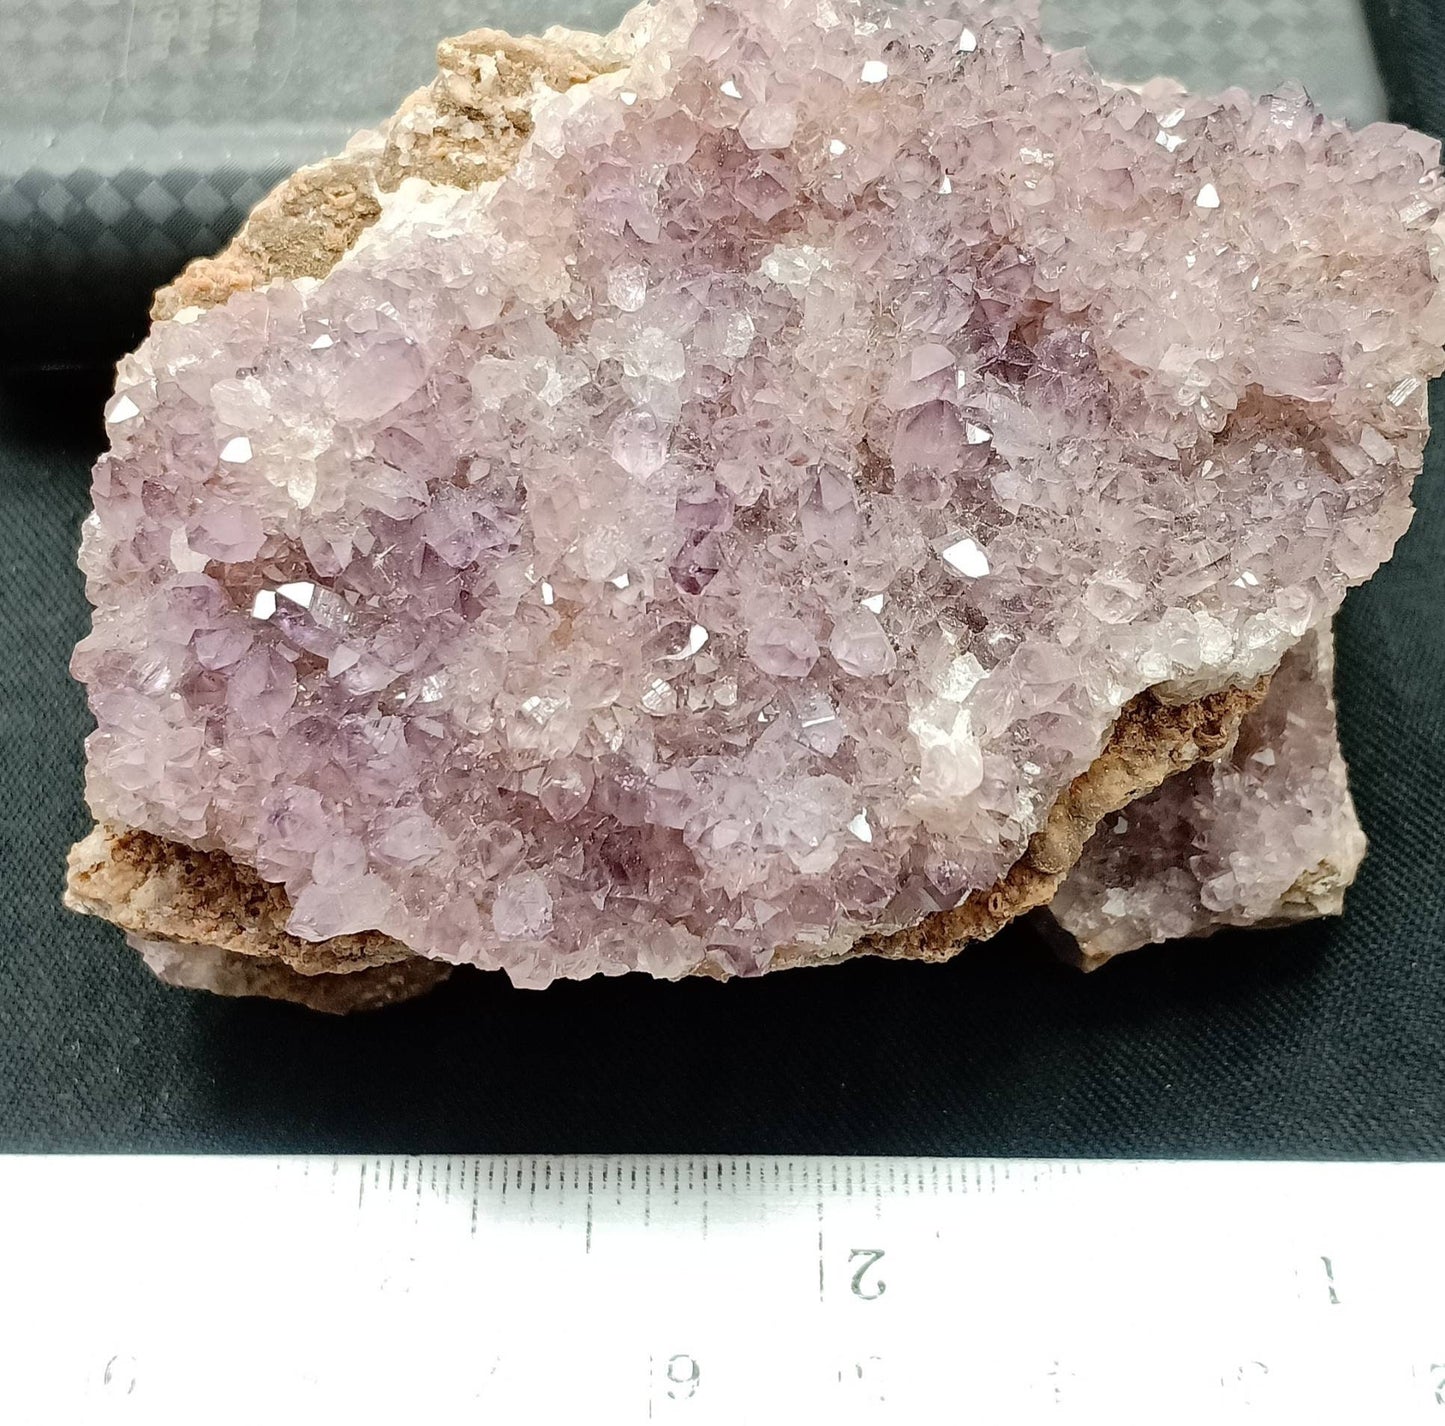 Single beautiful drusy Amethyst crystals Cluster specimens